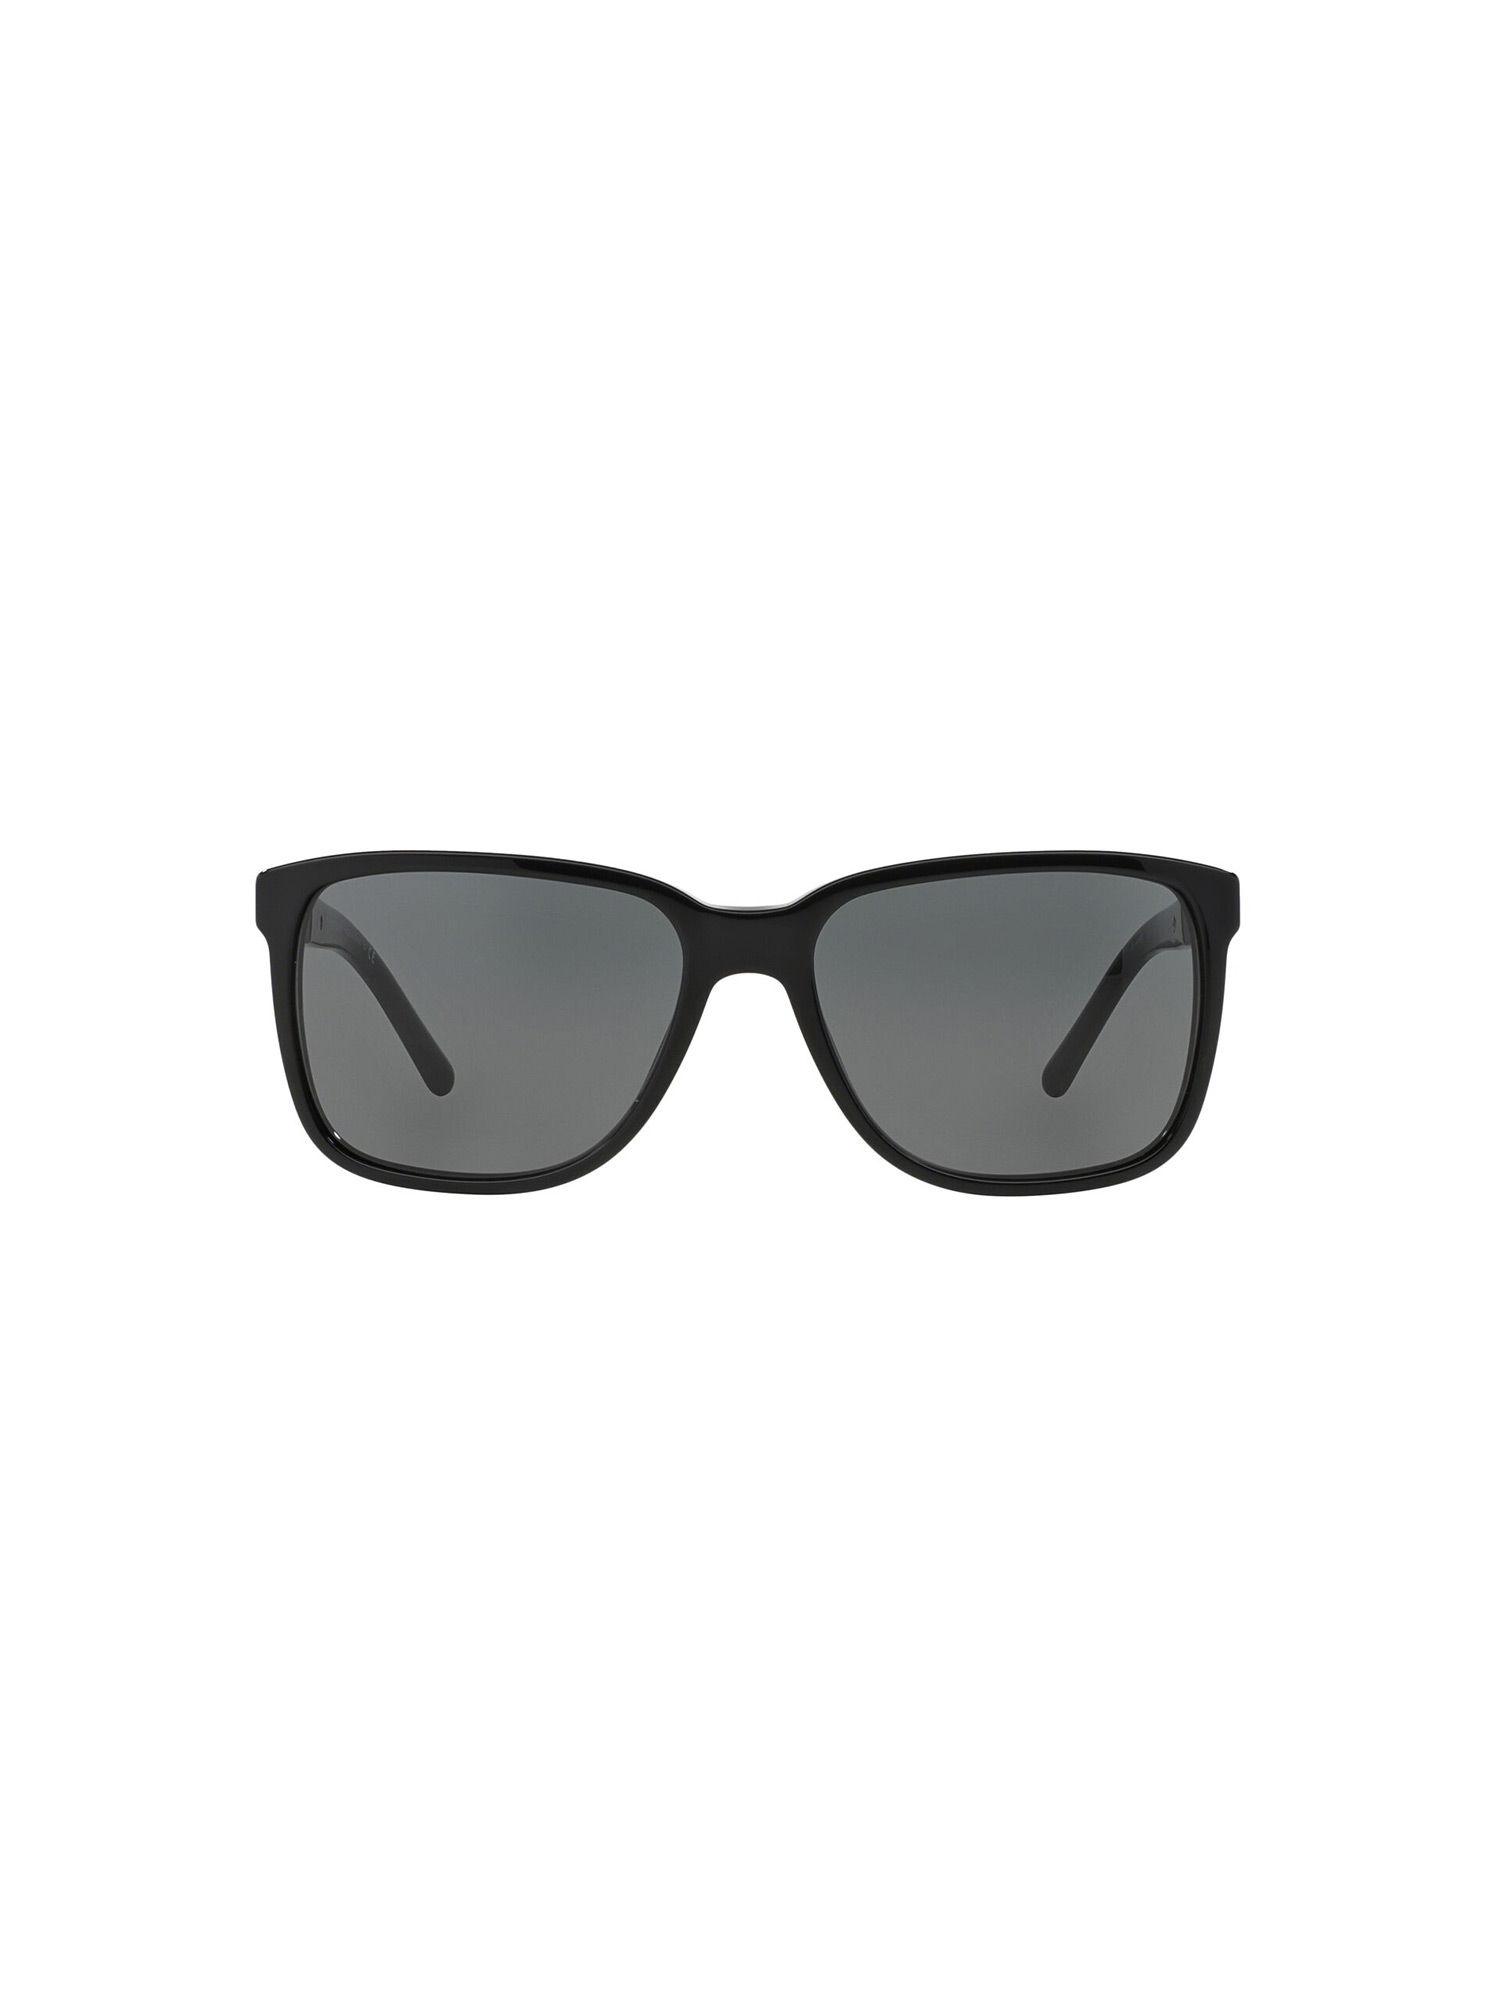 fashion 0be4181 canvas check grey lens square male sunglasses